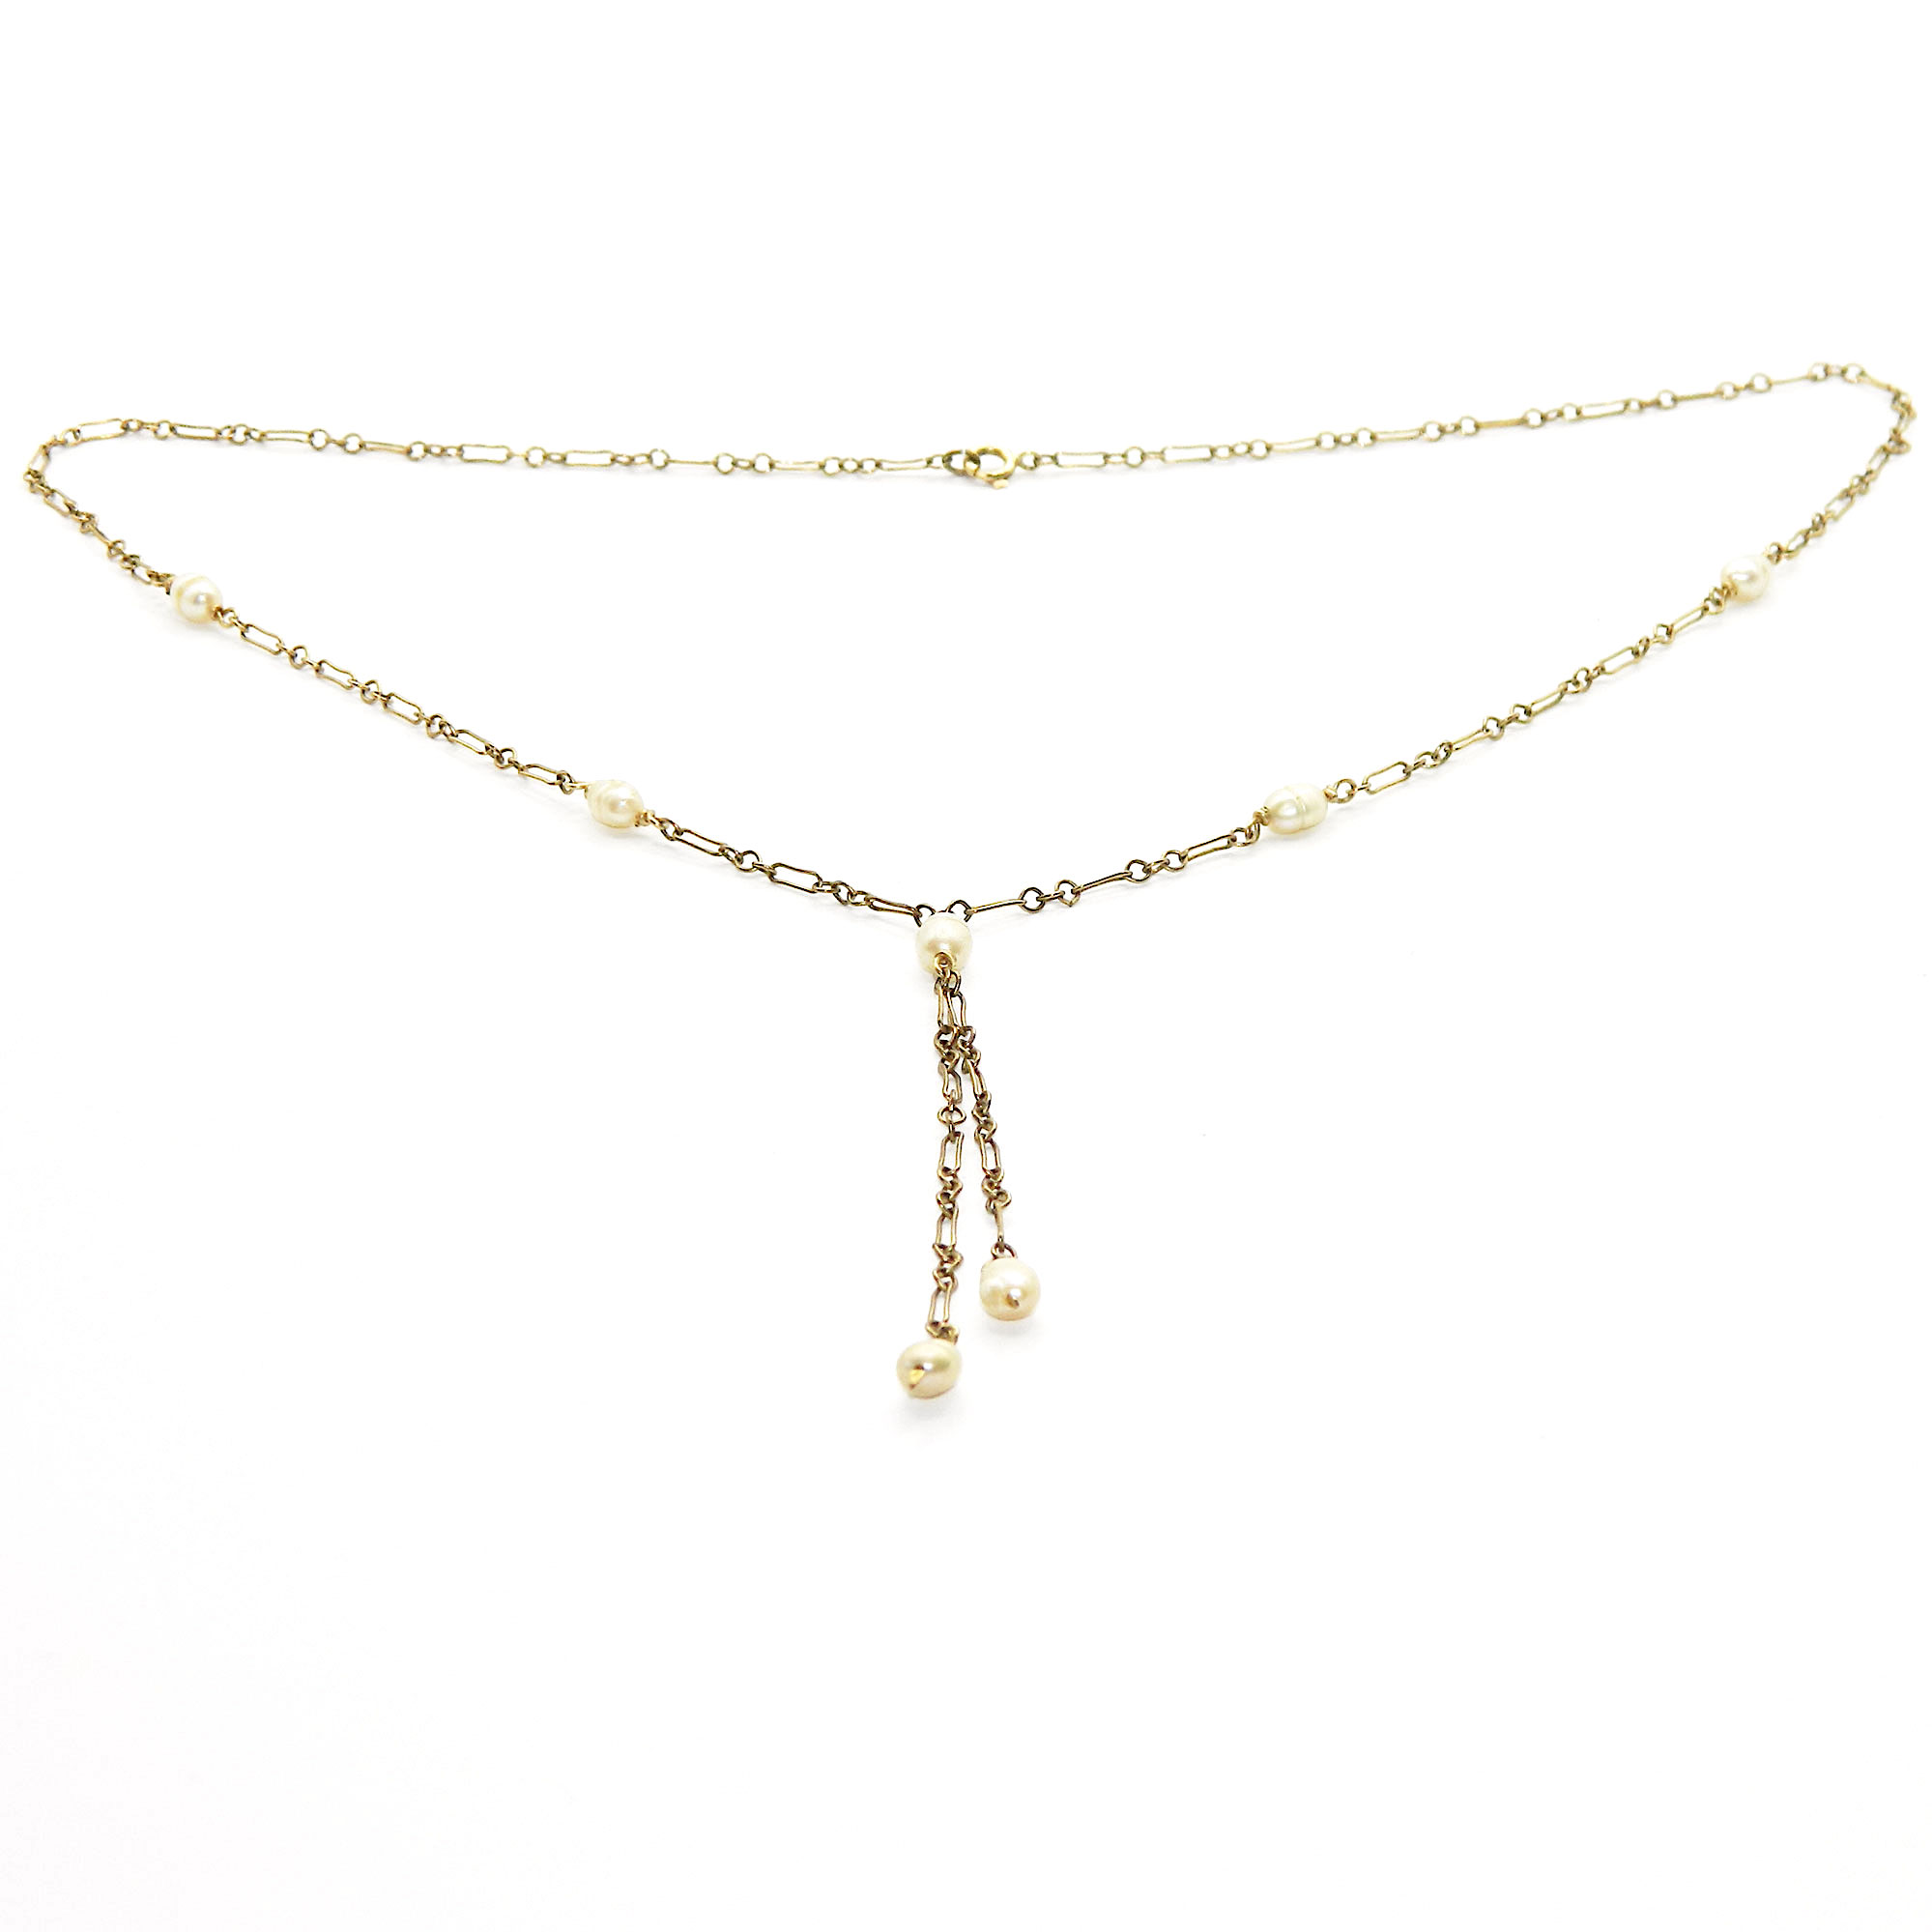 Faux Baroque pearl necklace